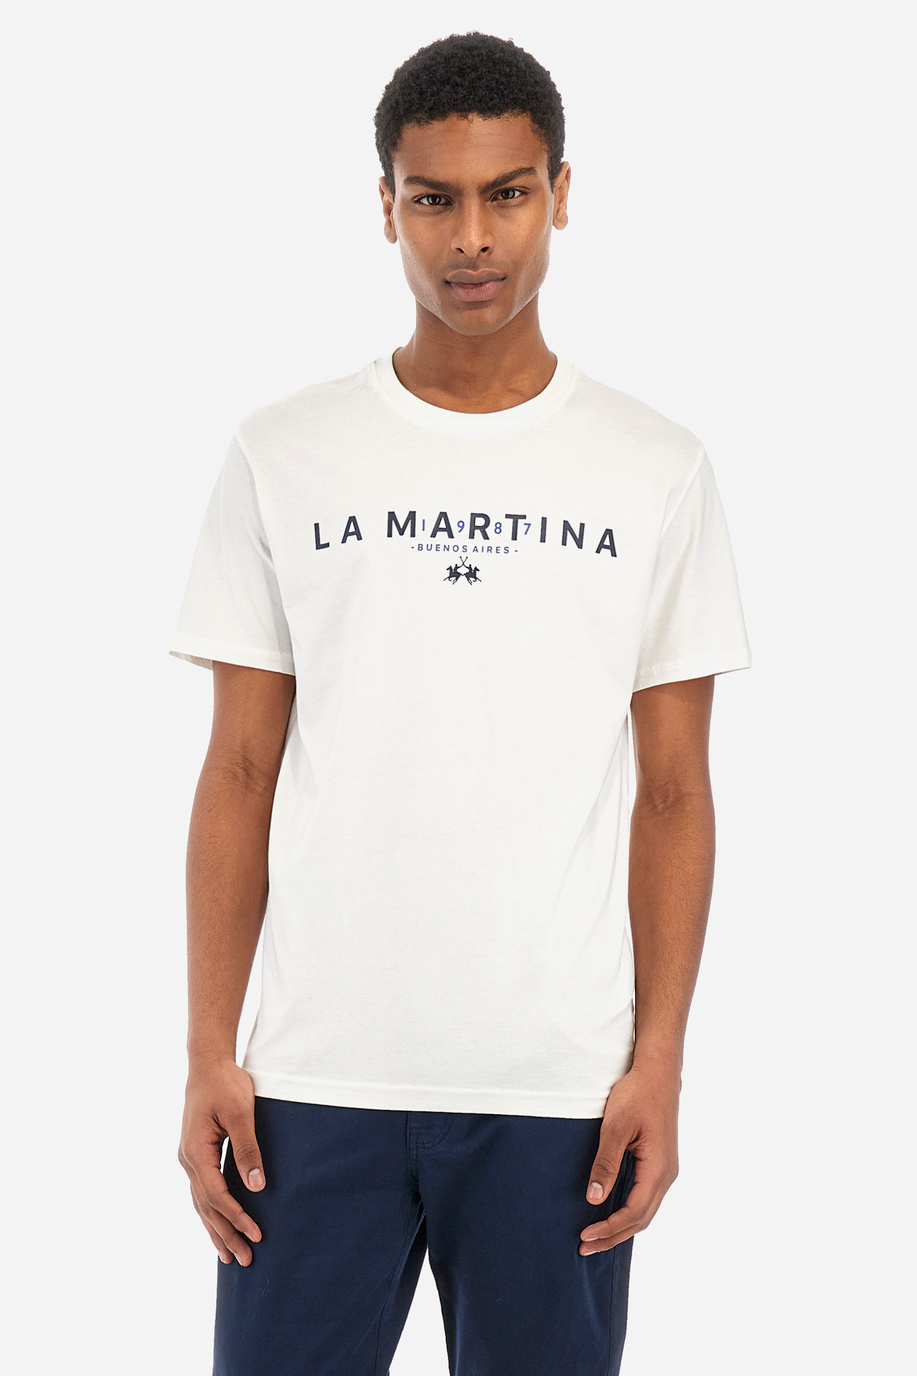 Men's T-shirts in a regular fit - Warley - T-shirts | La Martina - Official Online Shop